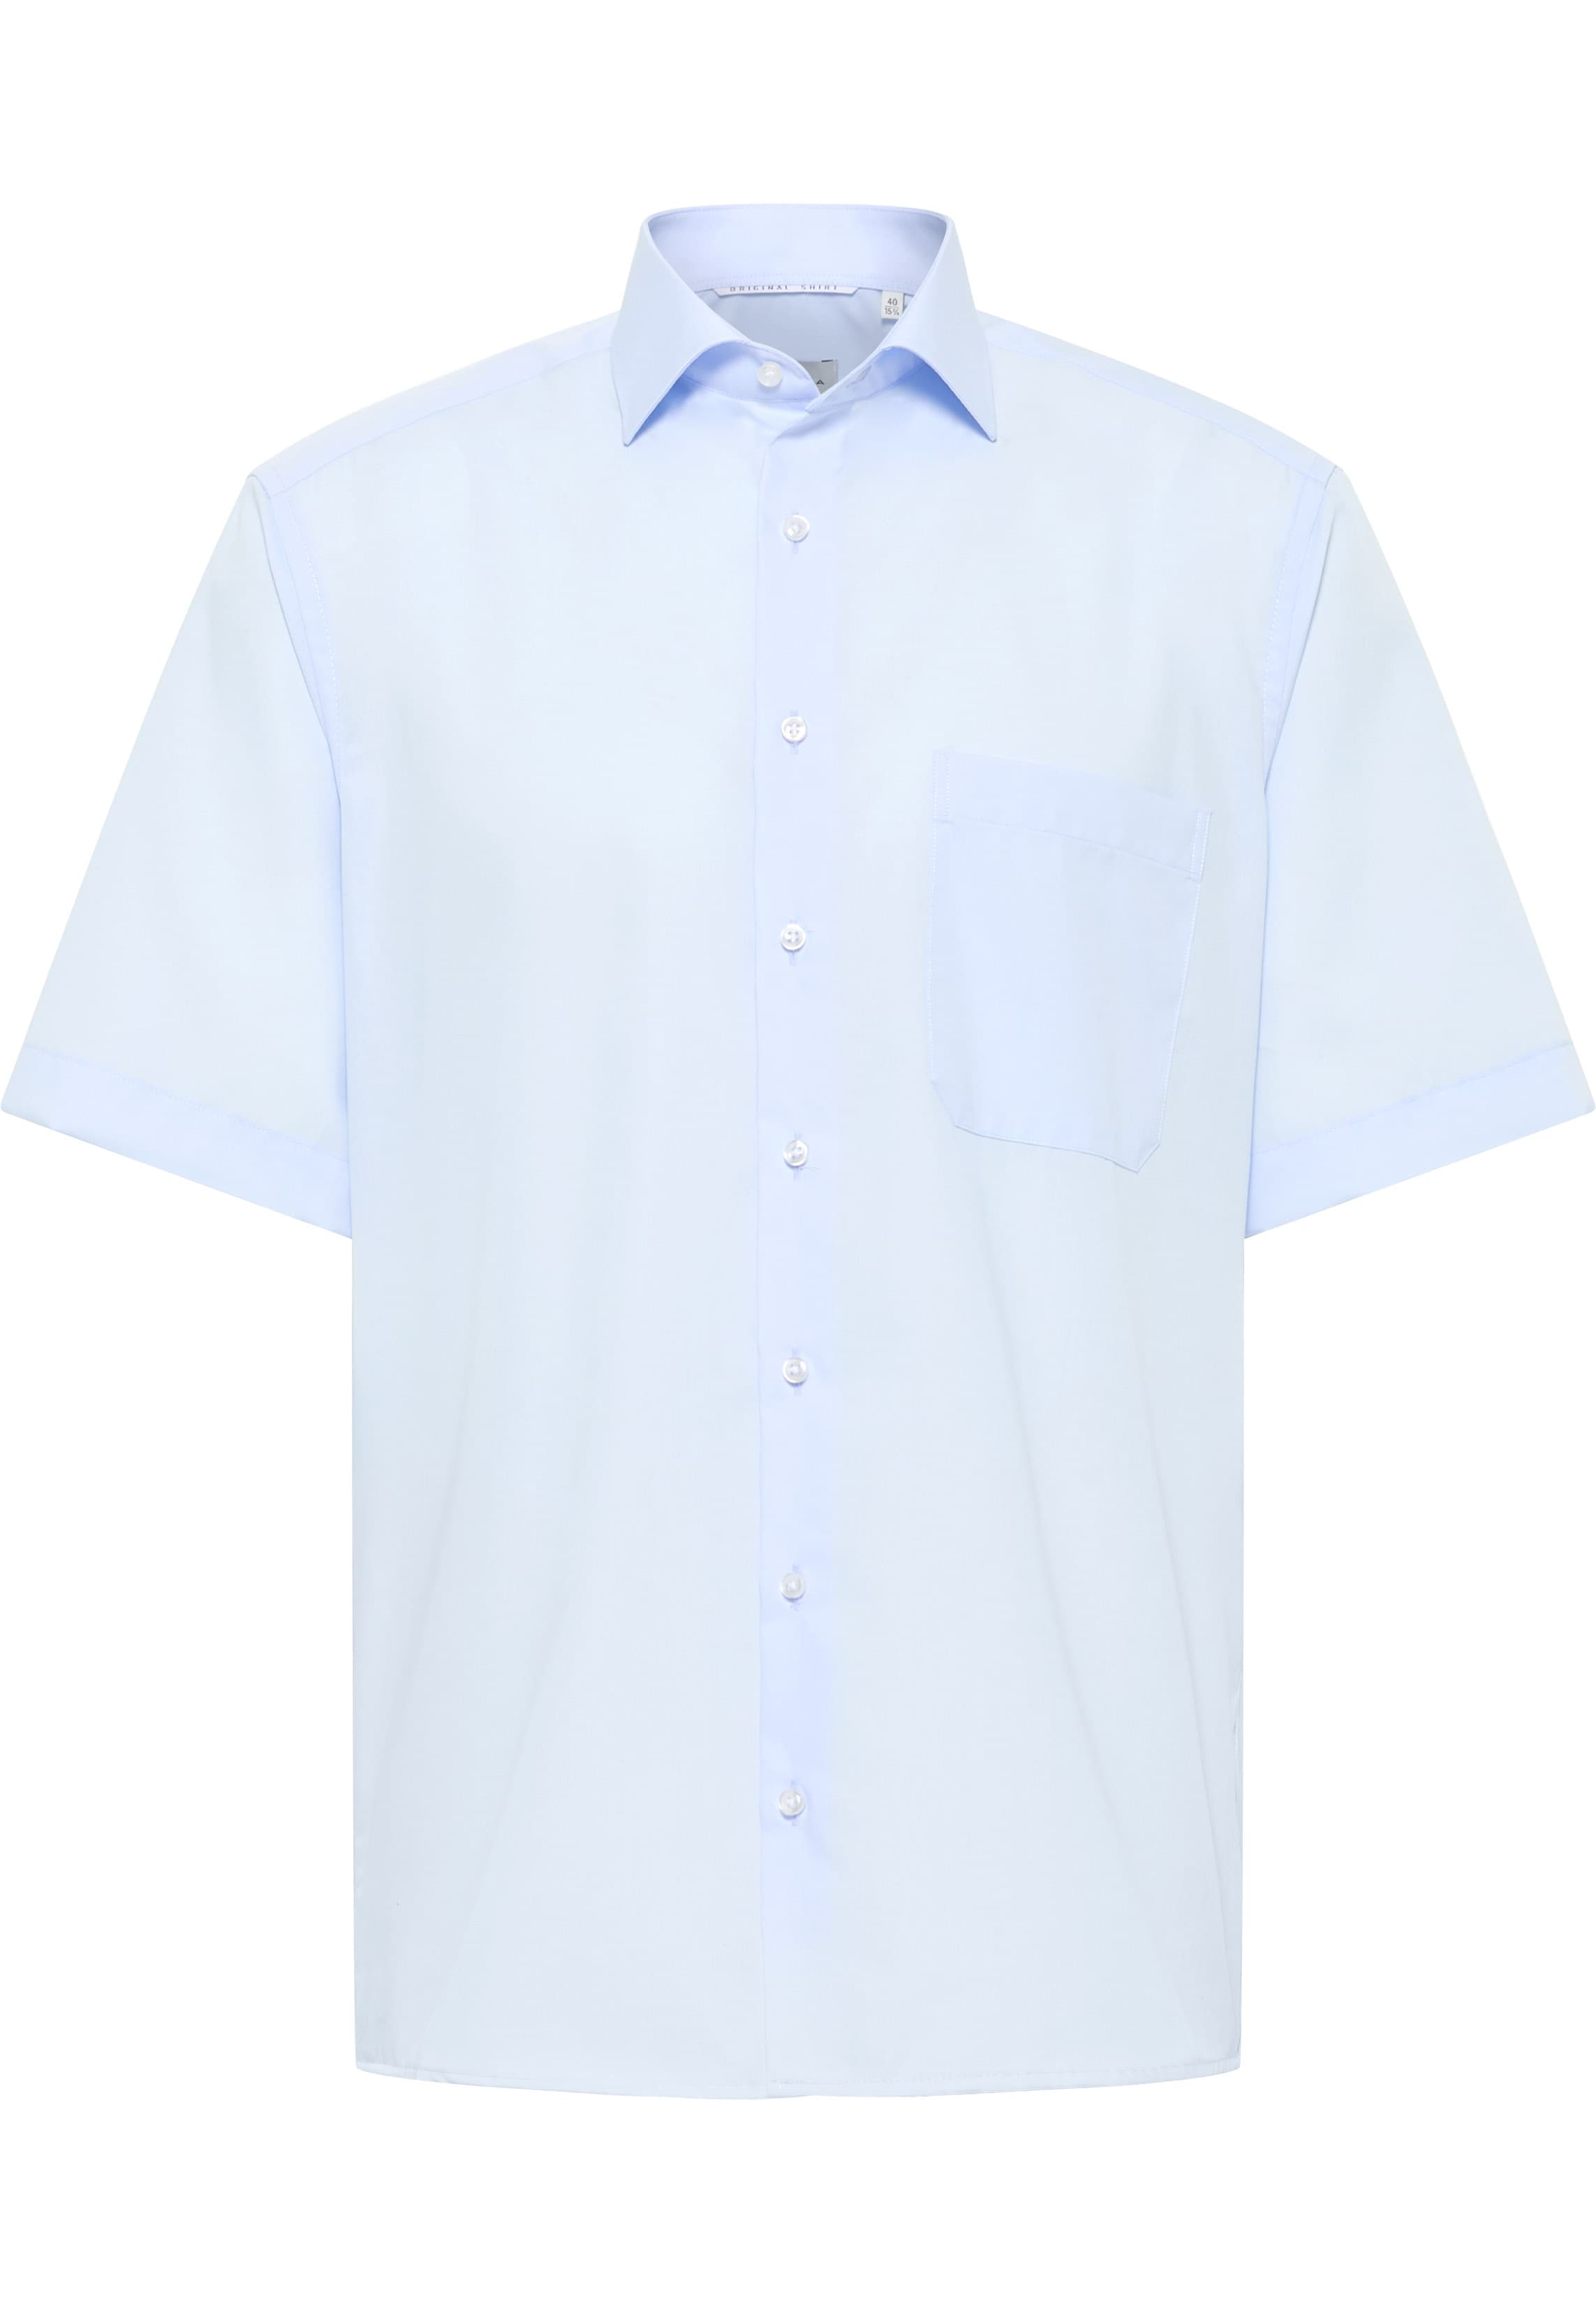 COMFORT FIT Original Shirt in lyseblå vlakte